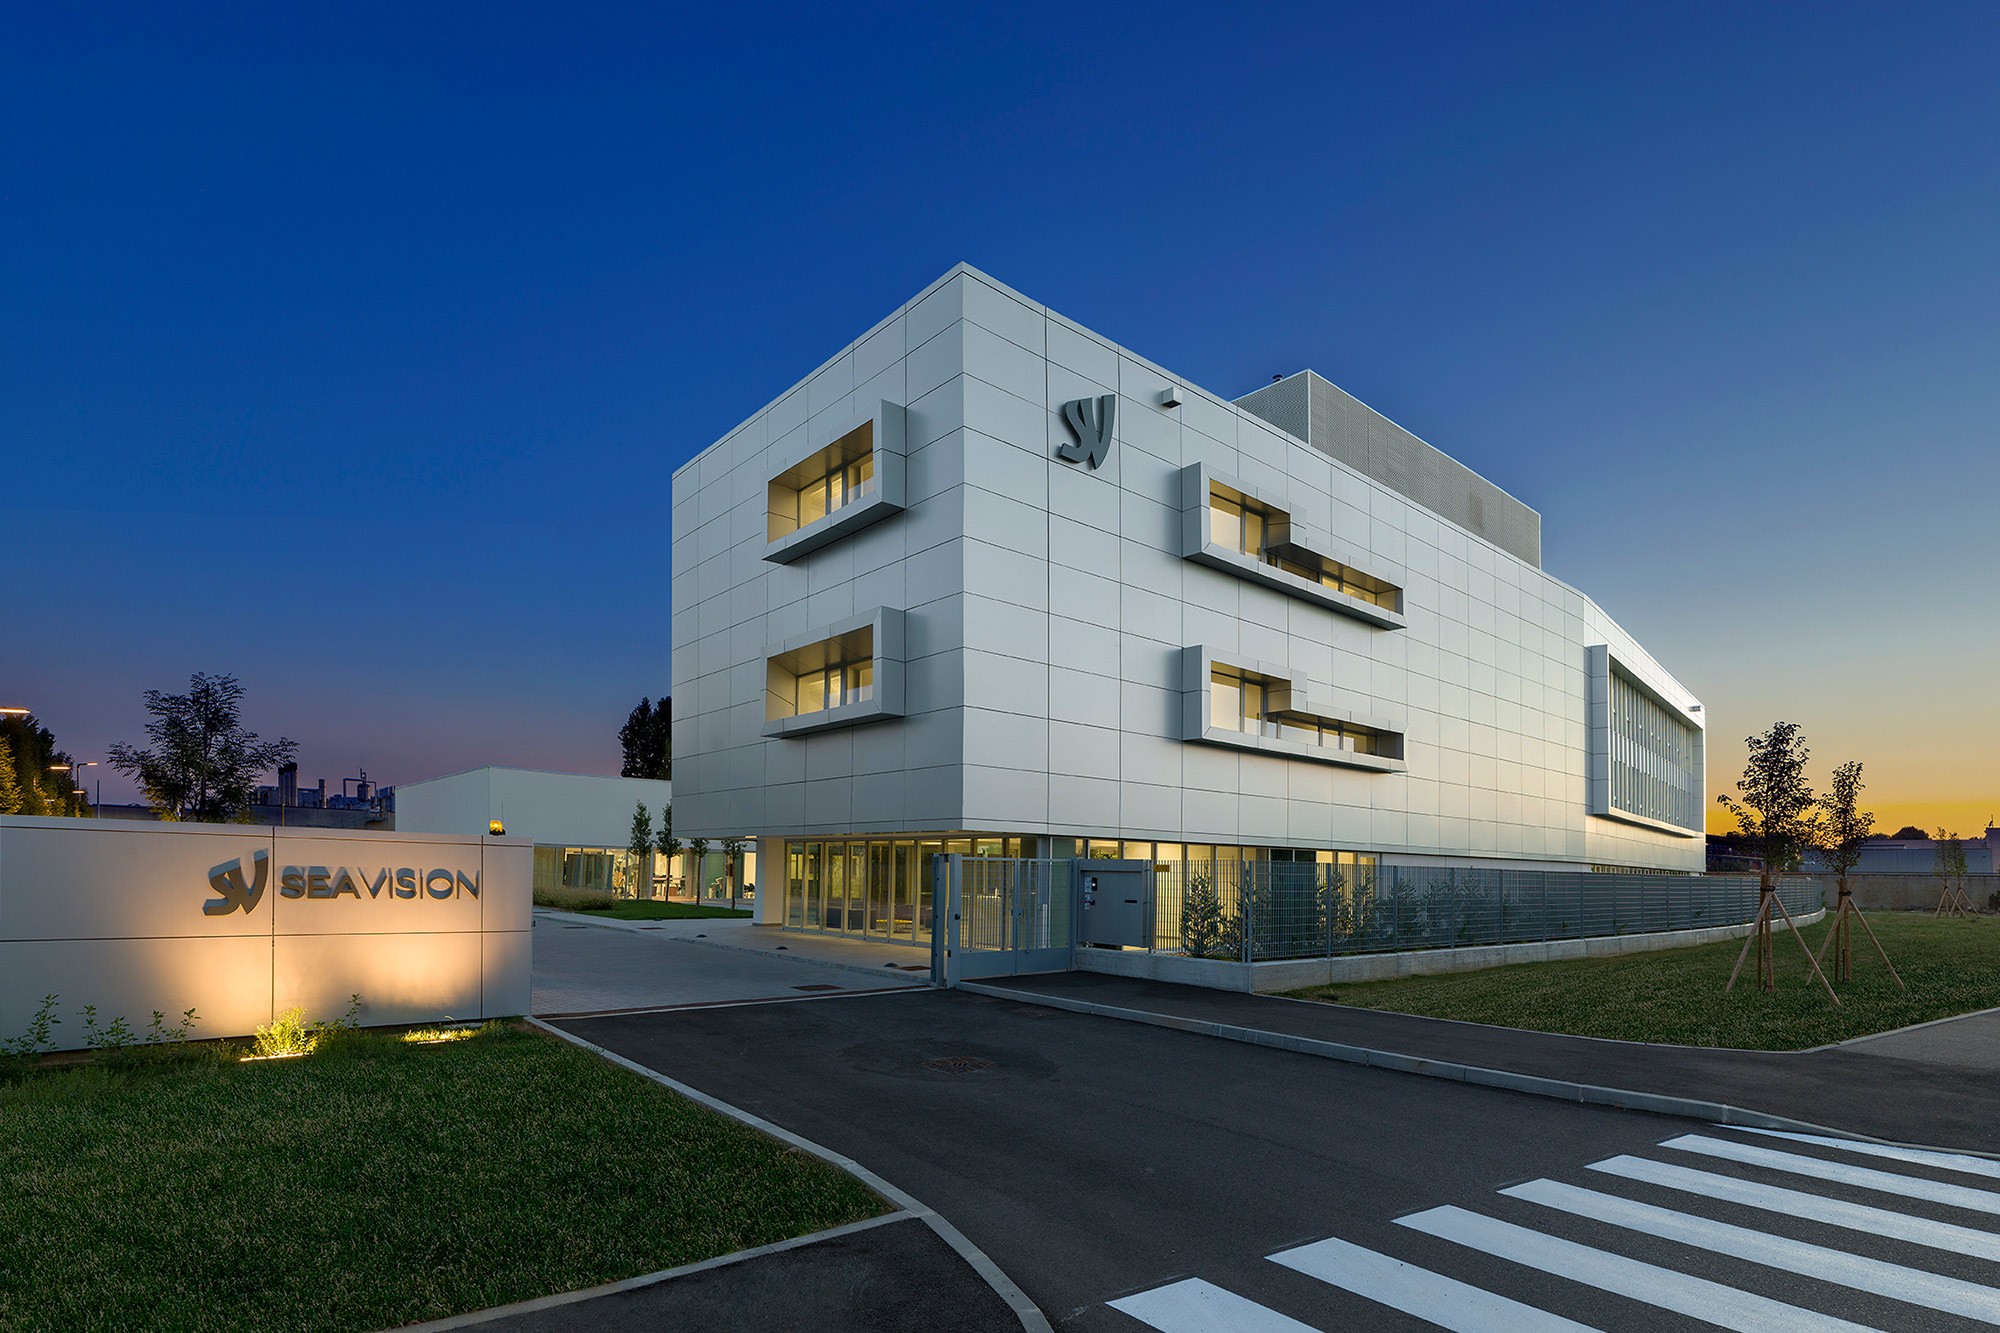 SEA Vision headquarters in Pavia (Milan)